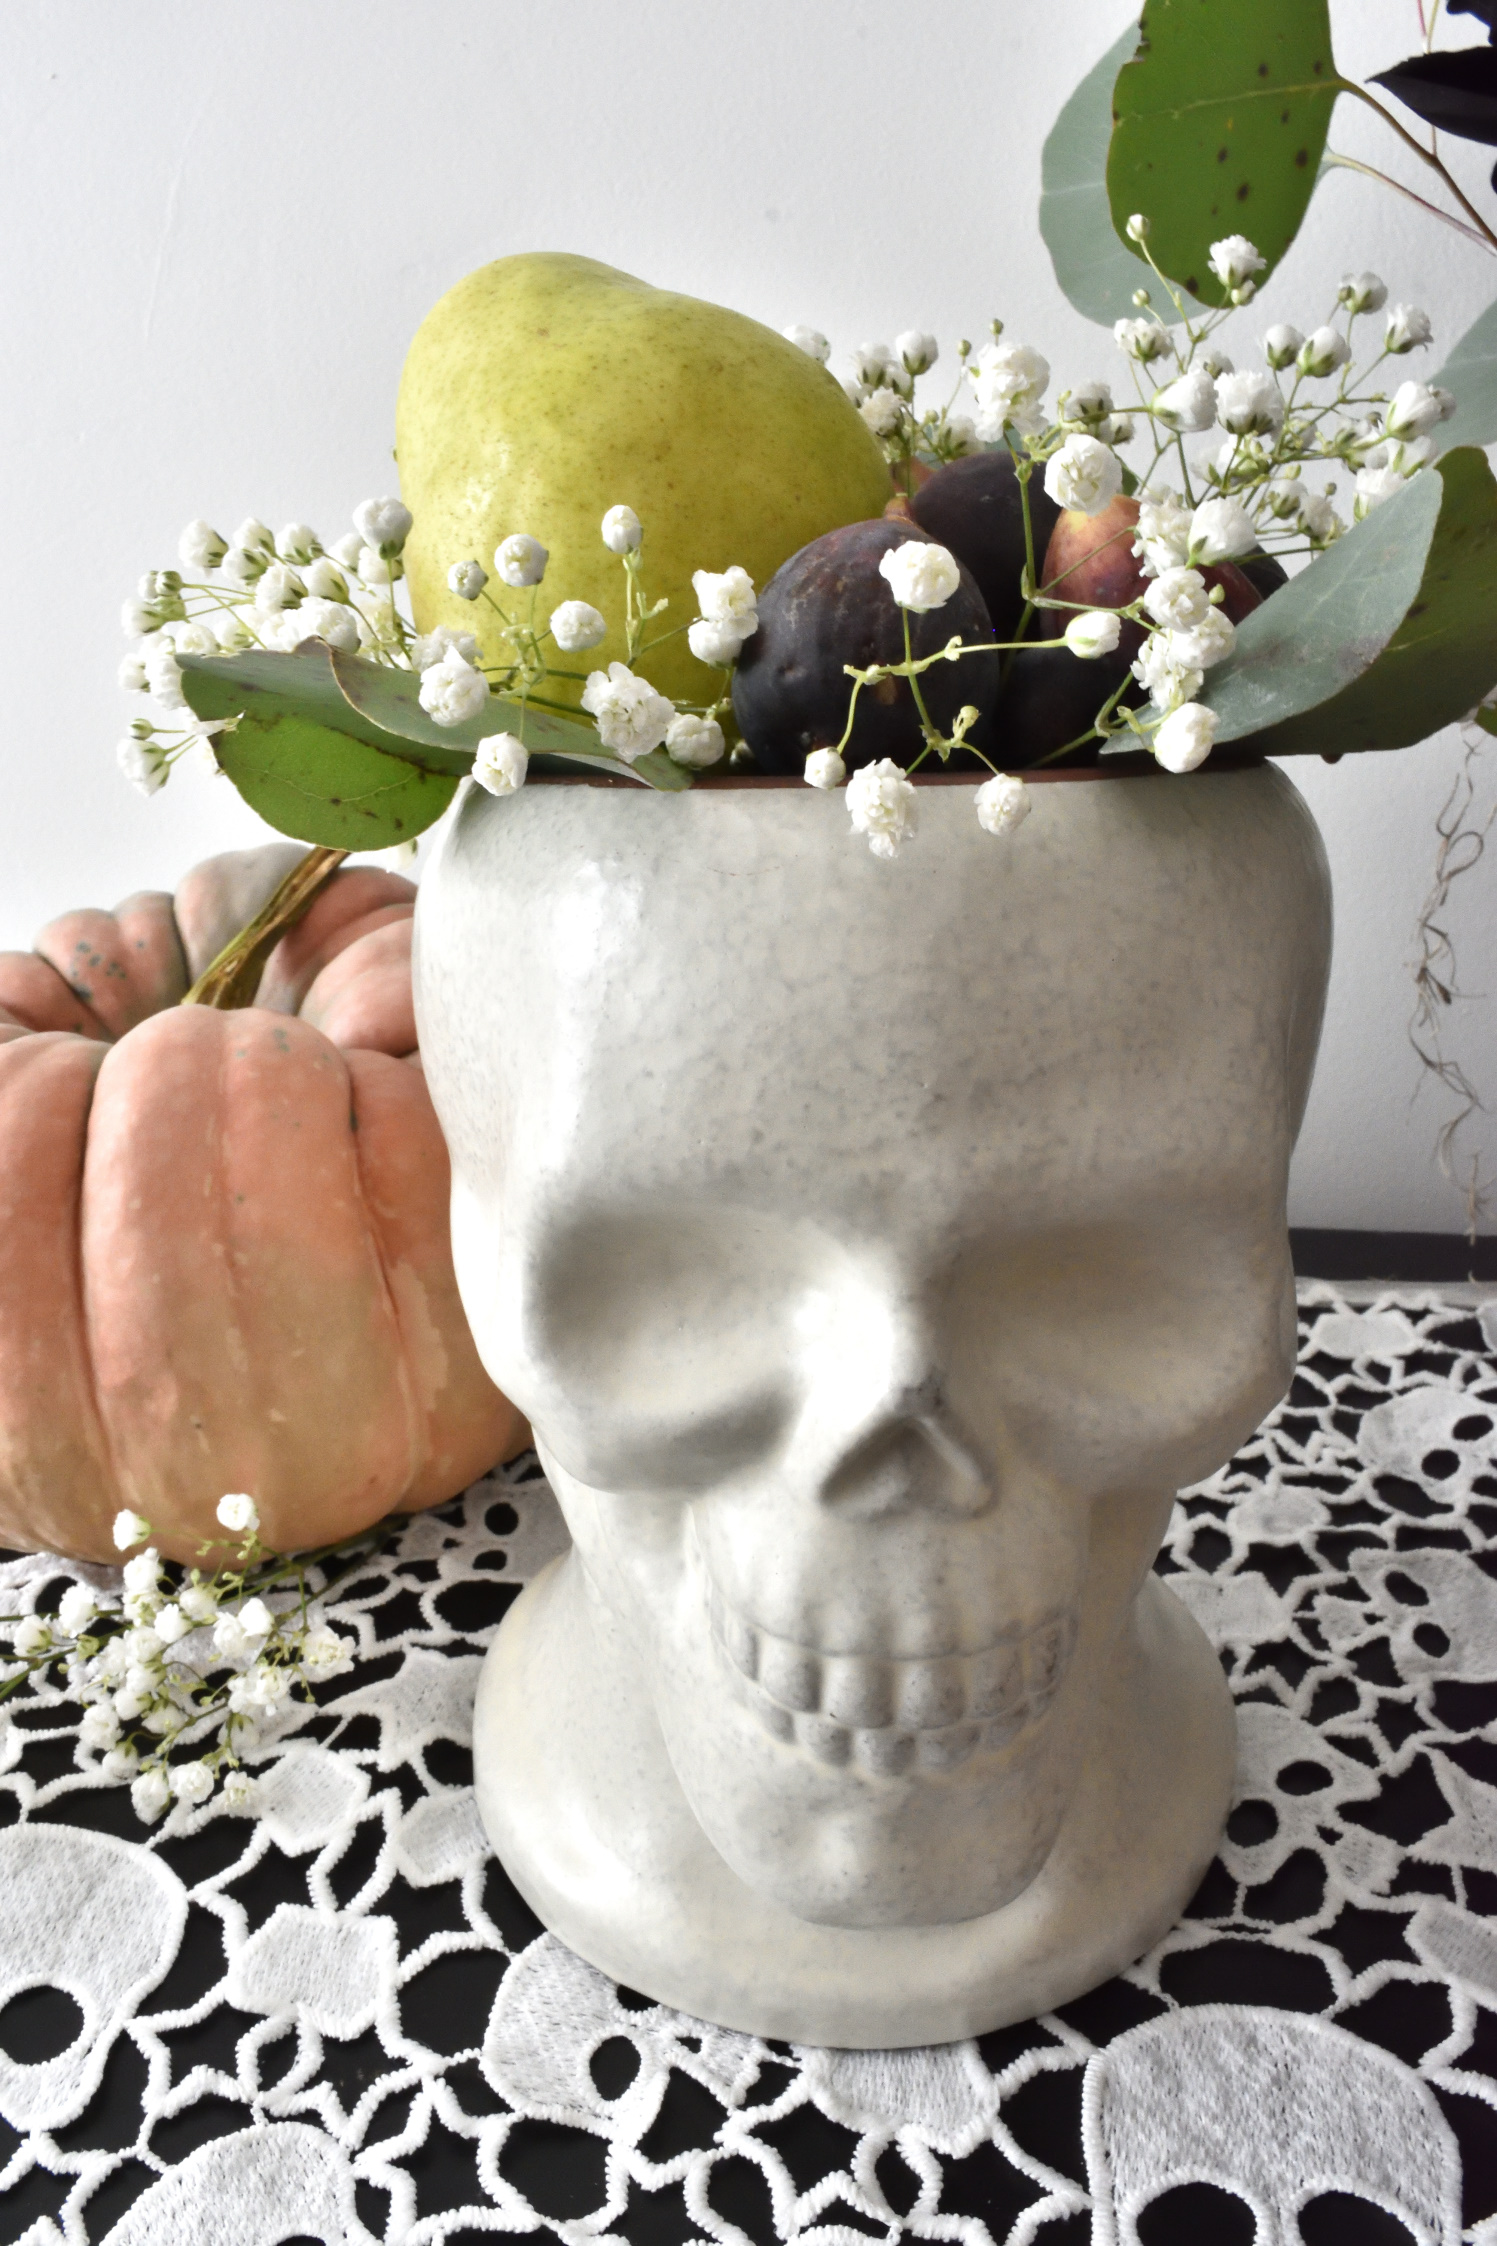 Not-so-spooky skeleton treats for a sweet Halloween!